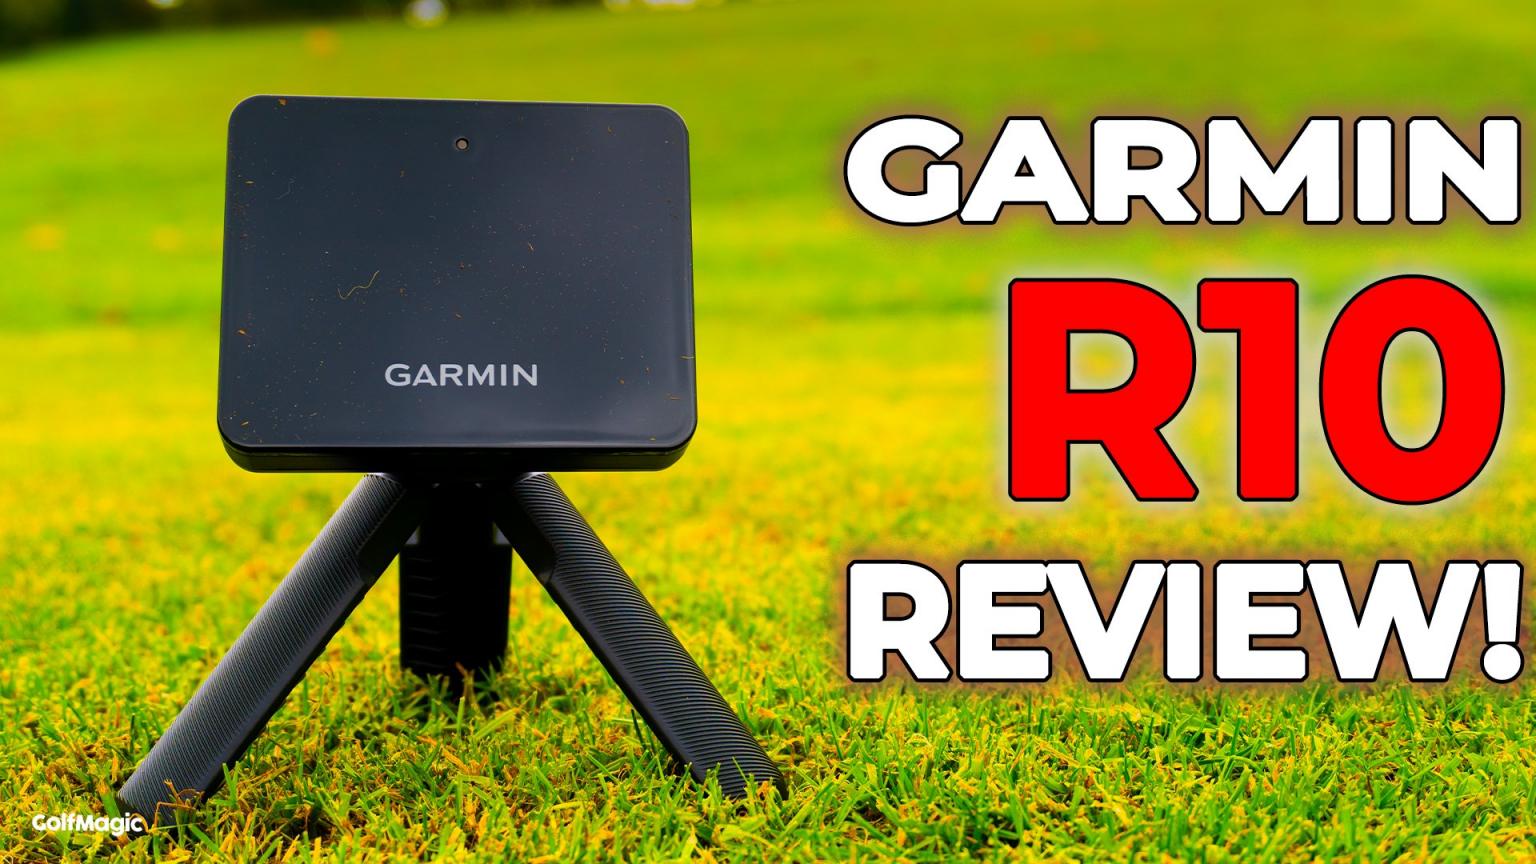 Garmin Approach R10 Portable Launch Monitor Review! GolfMagic